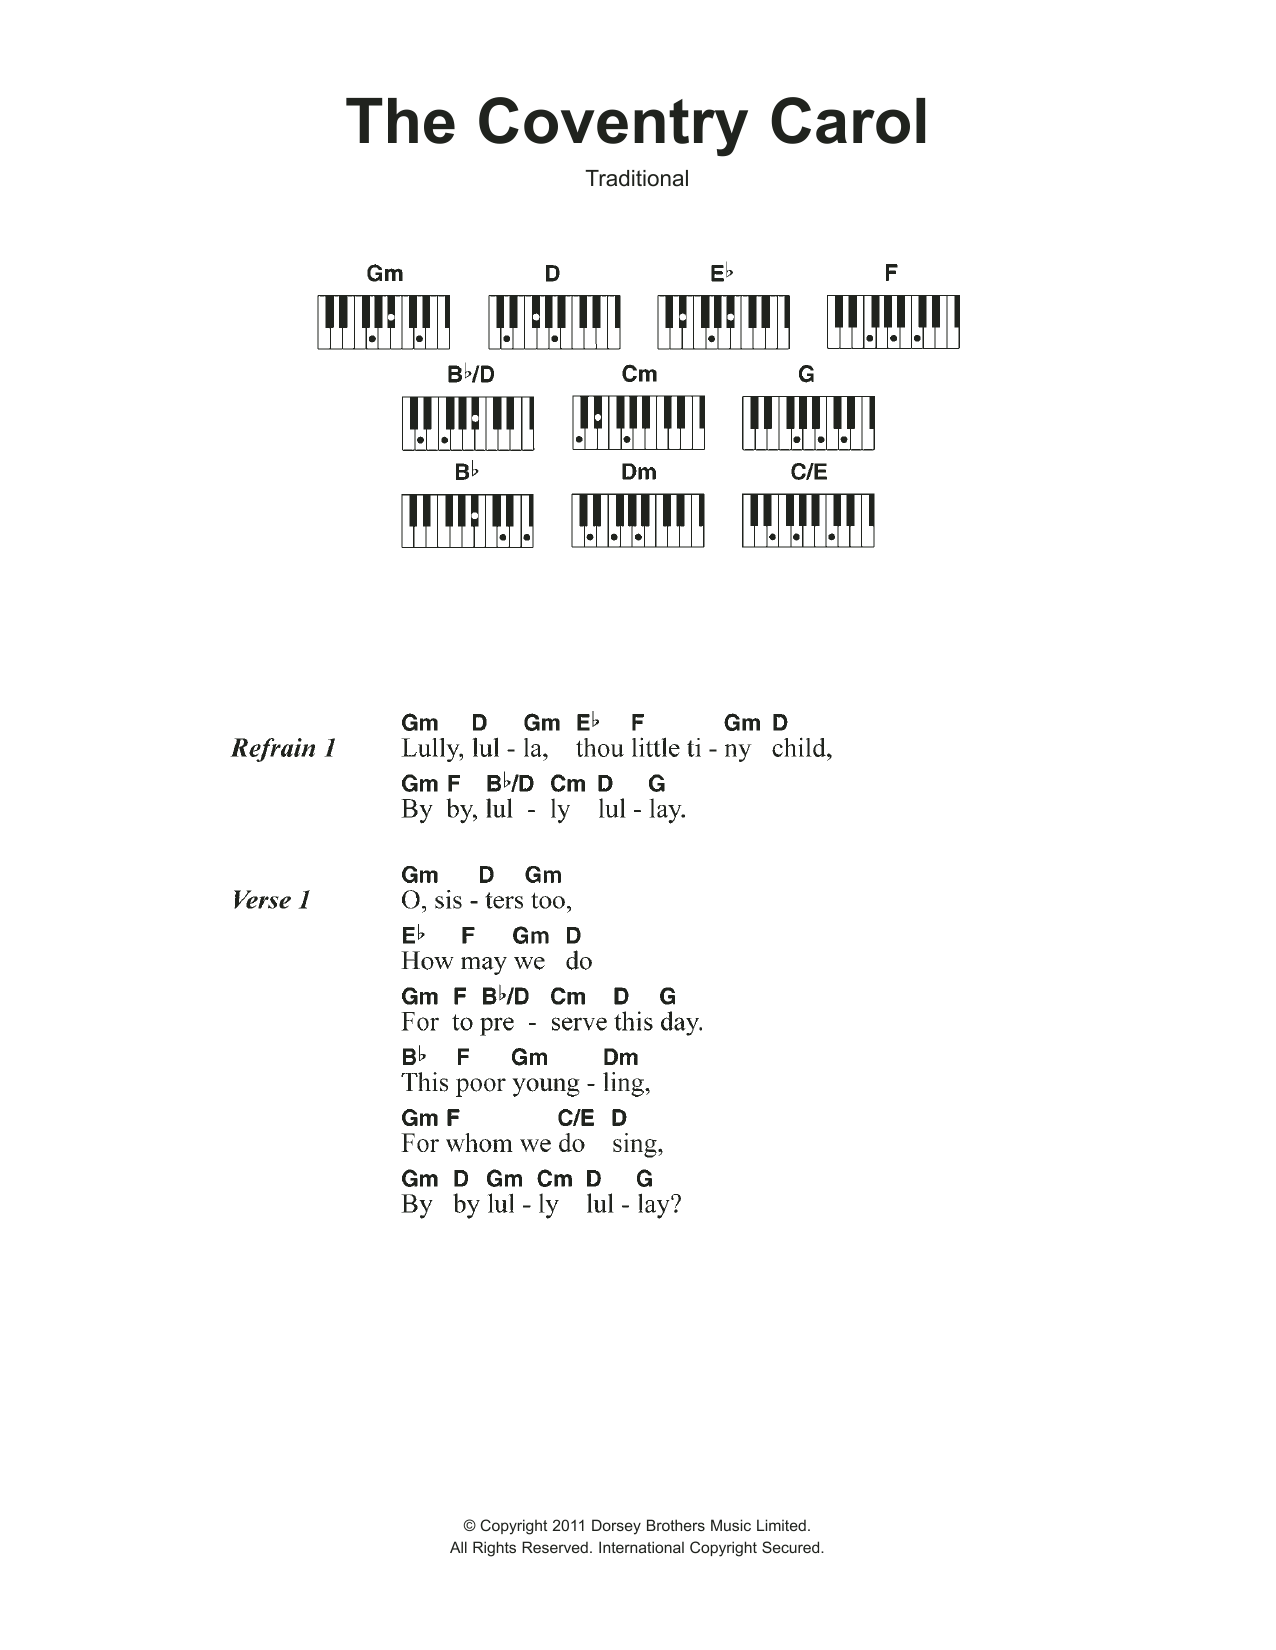 Christmas Carol Coventry Carol Sheet Music Notes & Chords for Lyrics & Piano Chords - Download or Print PDF